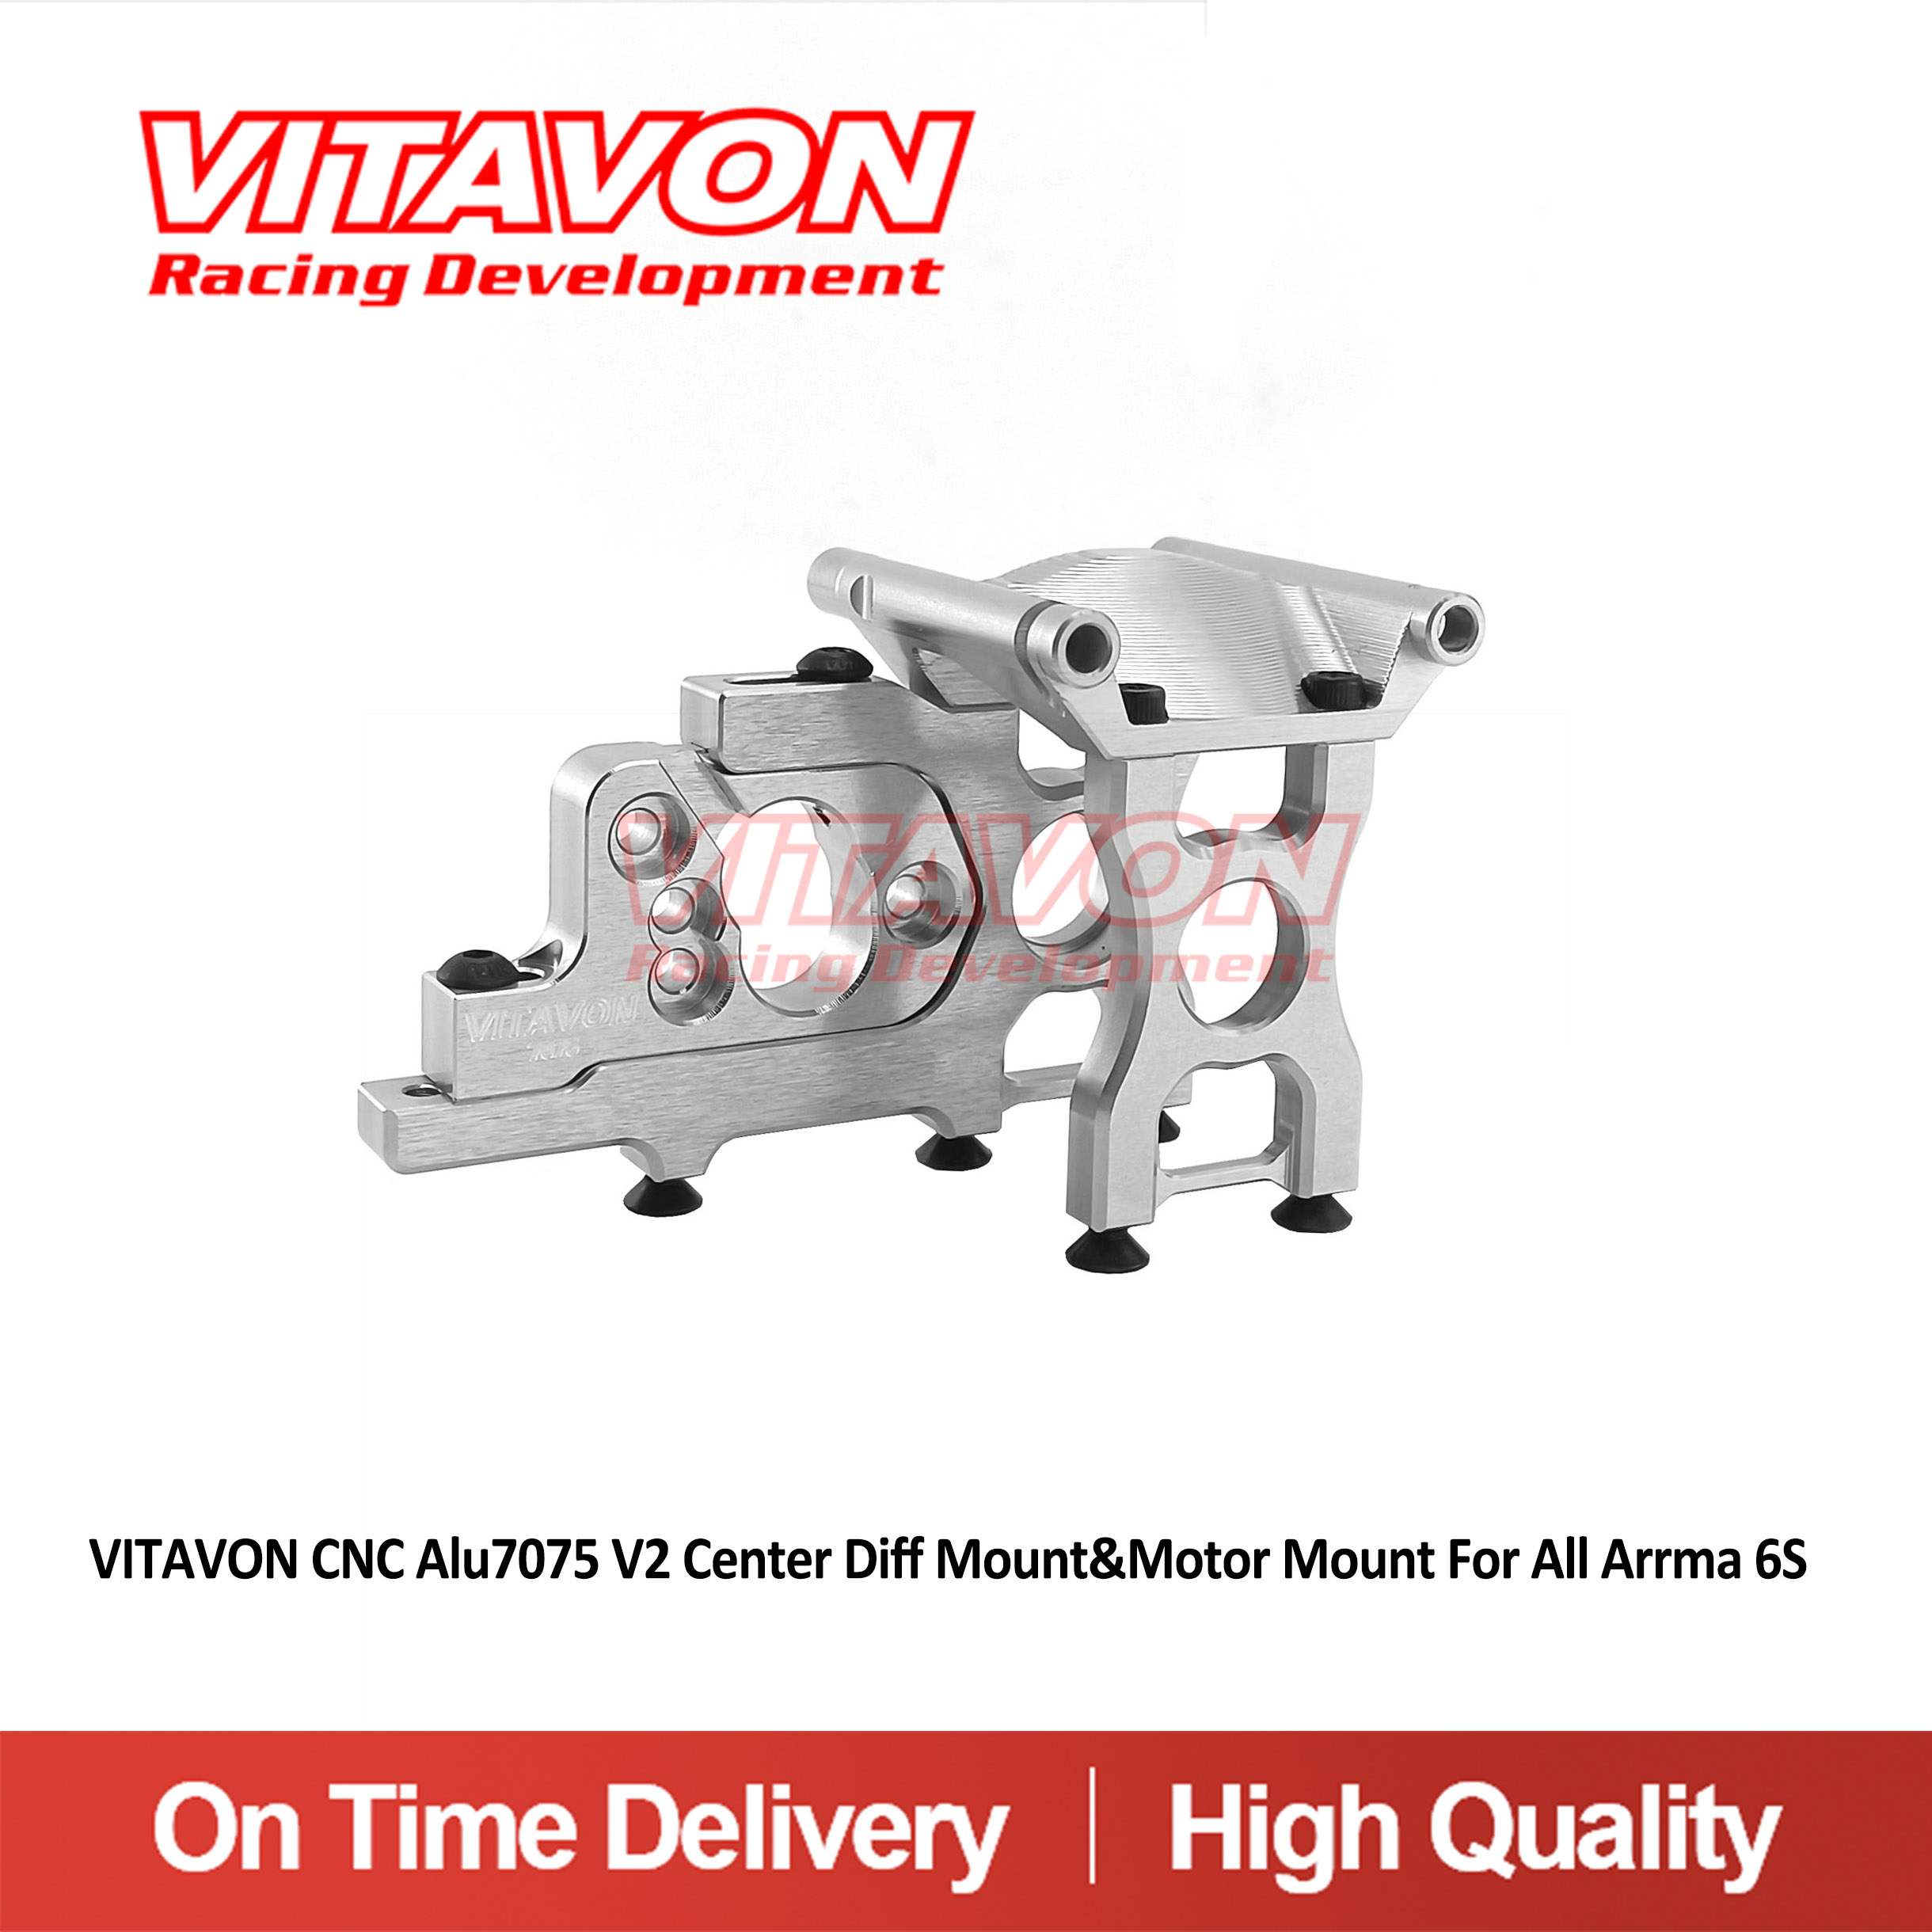 VITAVON CNC Alu7075 V2 Center Diff Mount&Motor Mount For All Arrma 6S